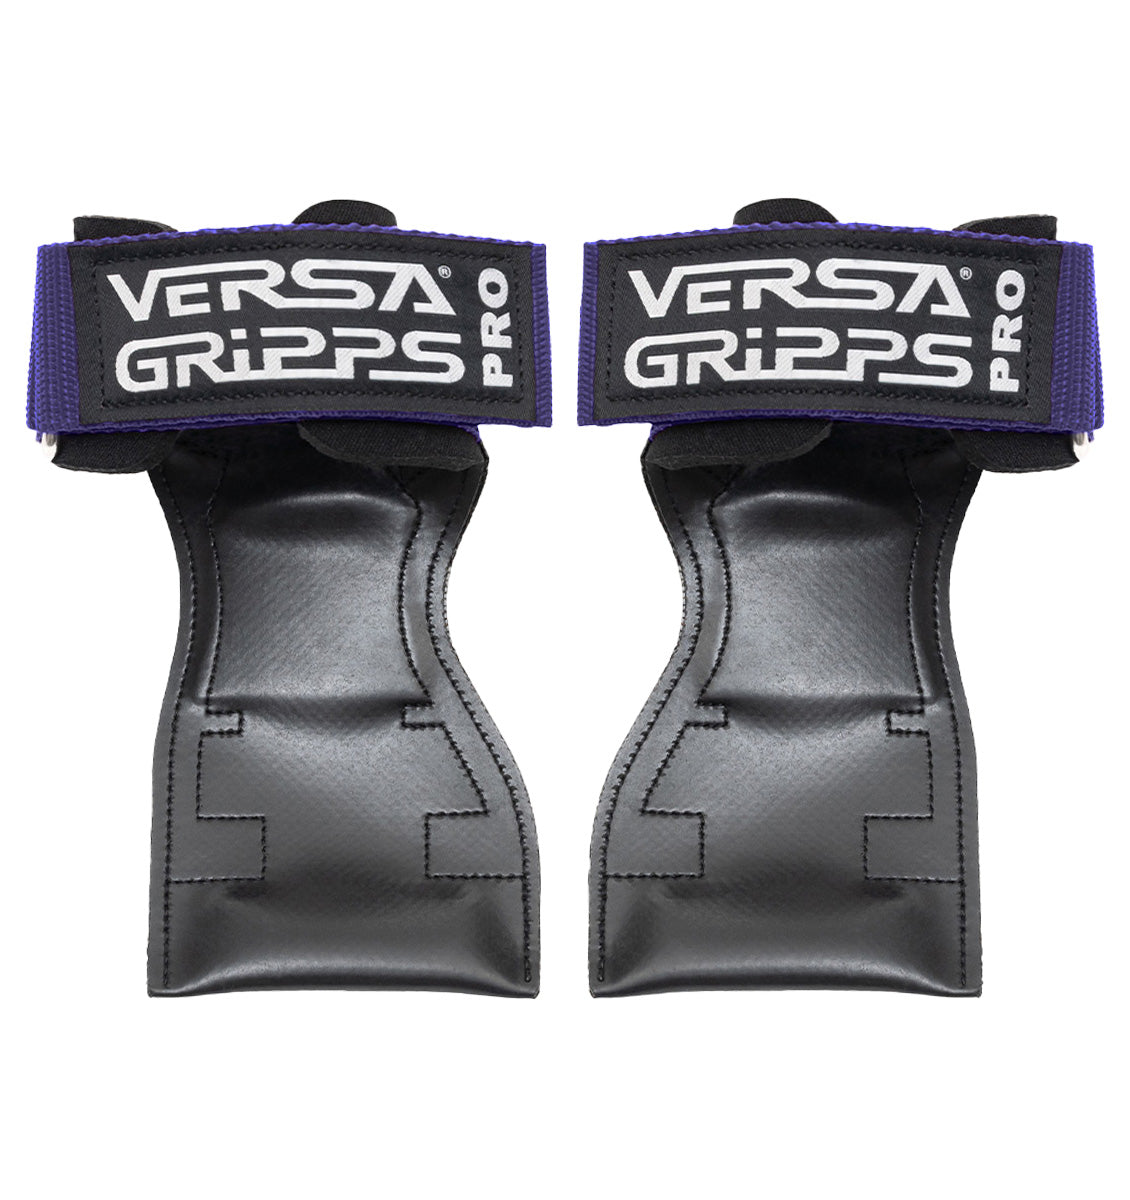 Versa Gripps® PRO Series Lifting Straps - Purple - 8